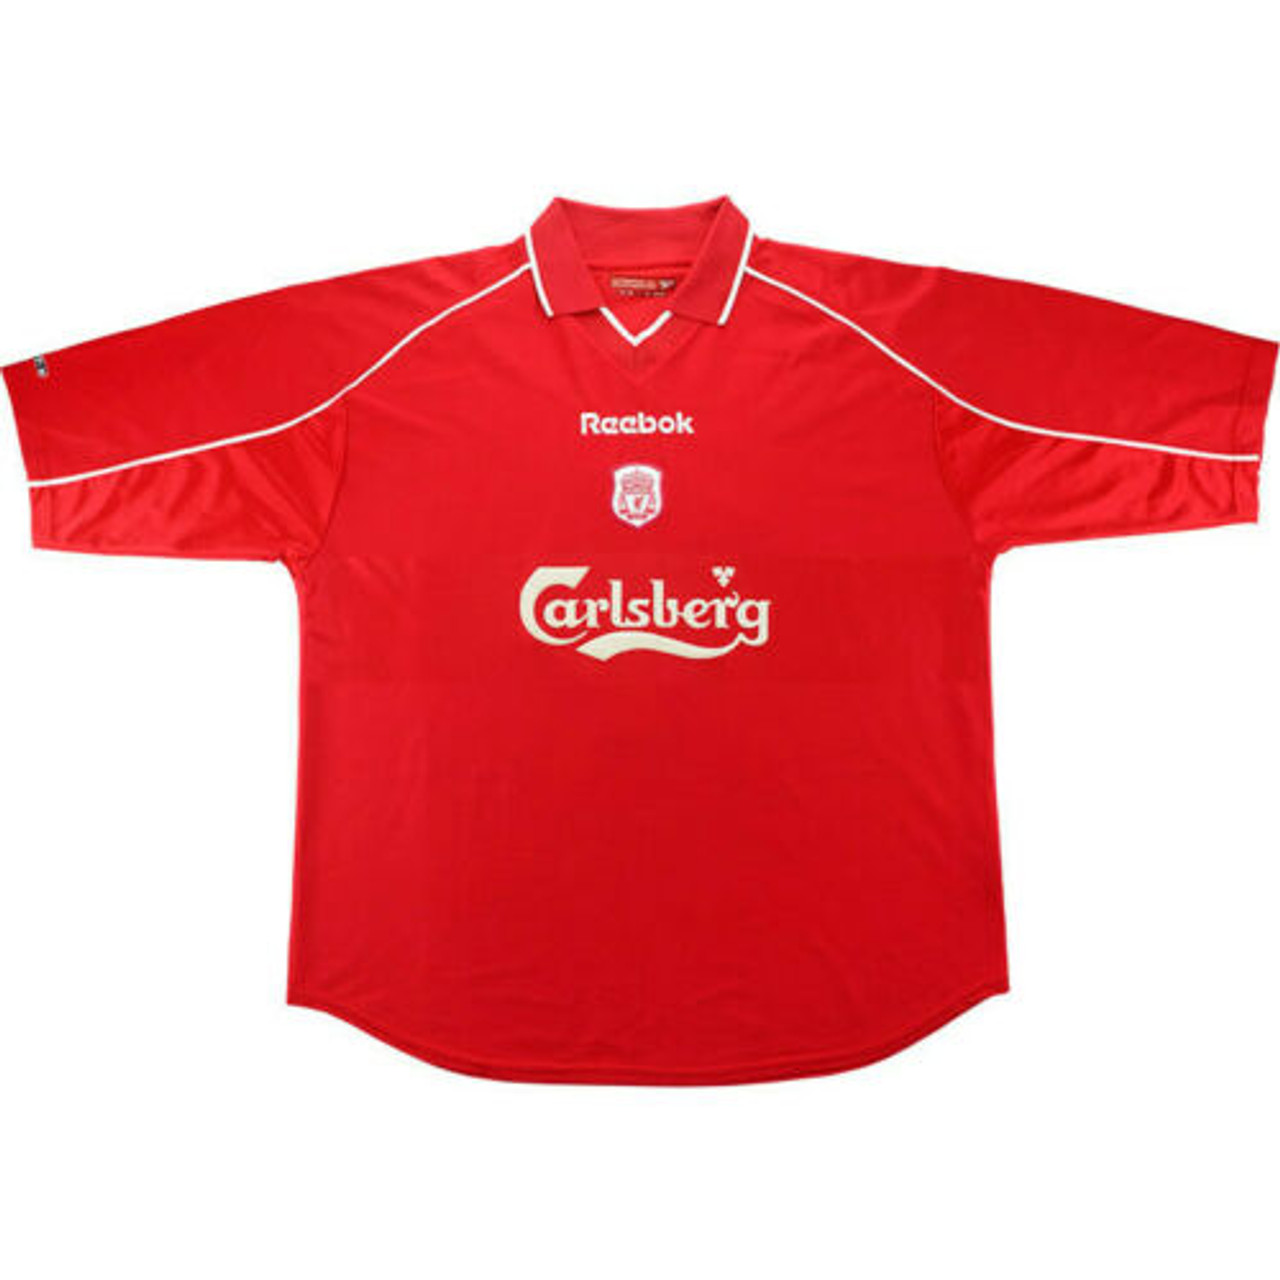 liverpool jersey 2001